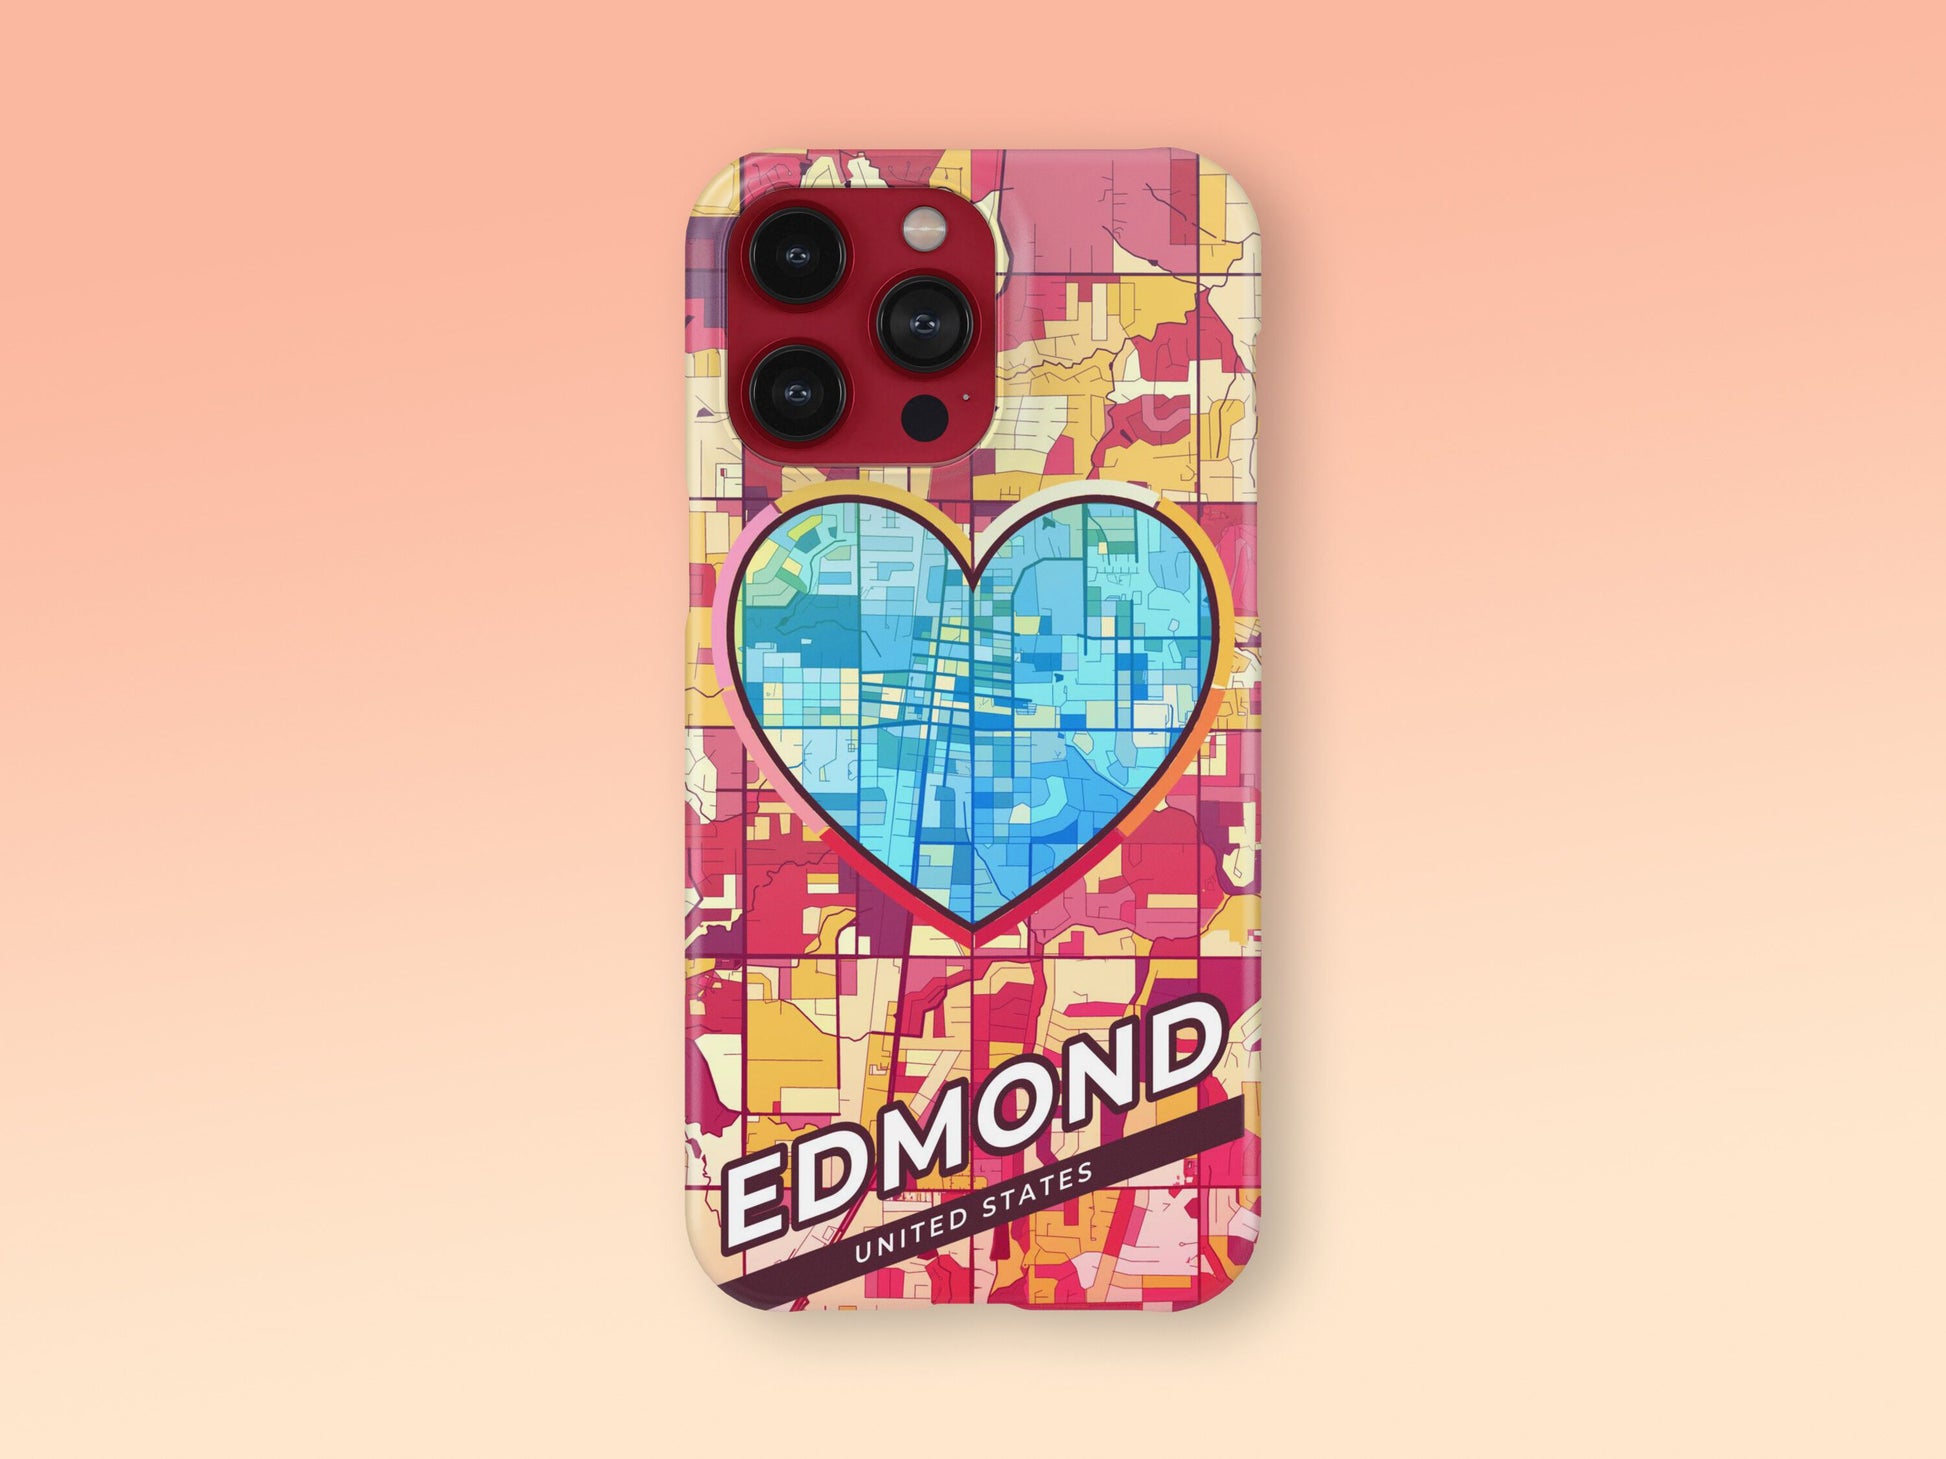 Edmond Oklahoma slim phone case with colorful icon. Birthday, wedding or housewarming gift. Couple match cases. 2